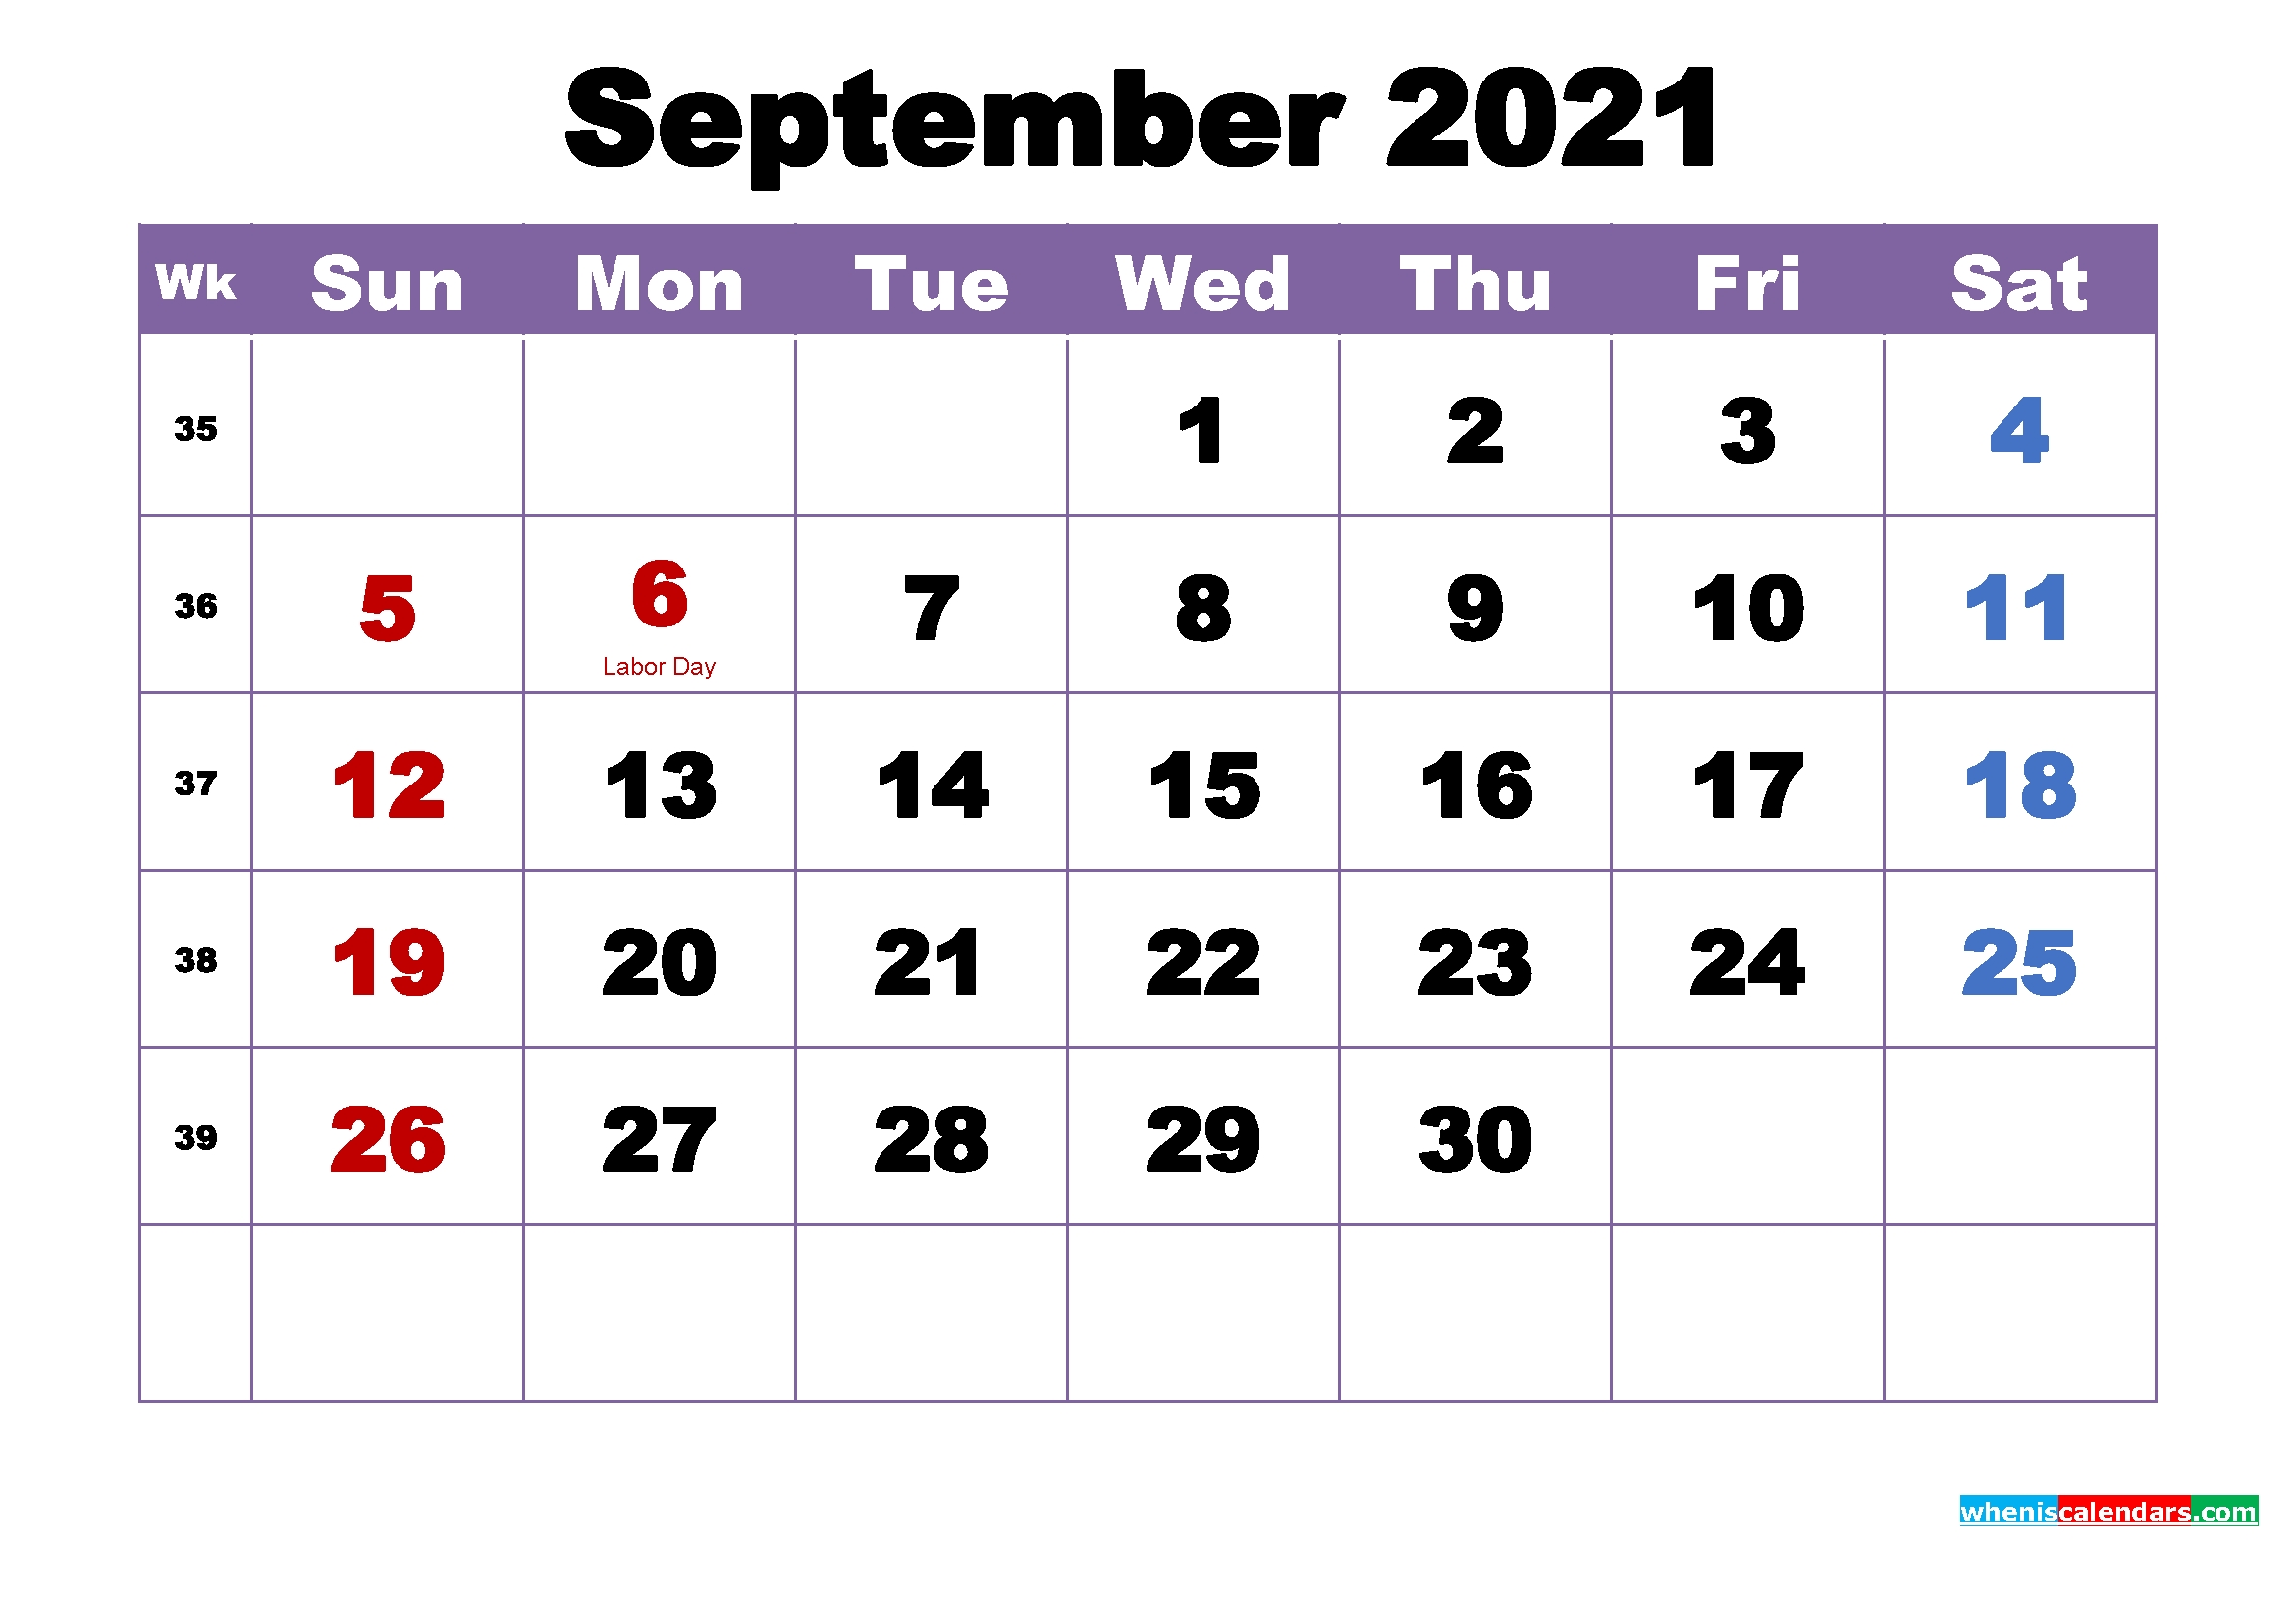 September 2021 Calendar With Holidays Printable Calendar For September And October 2021